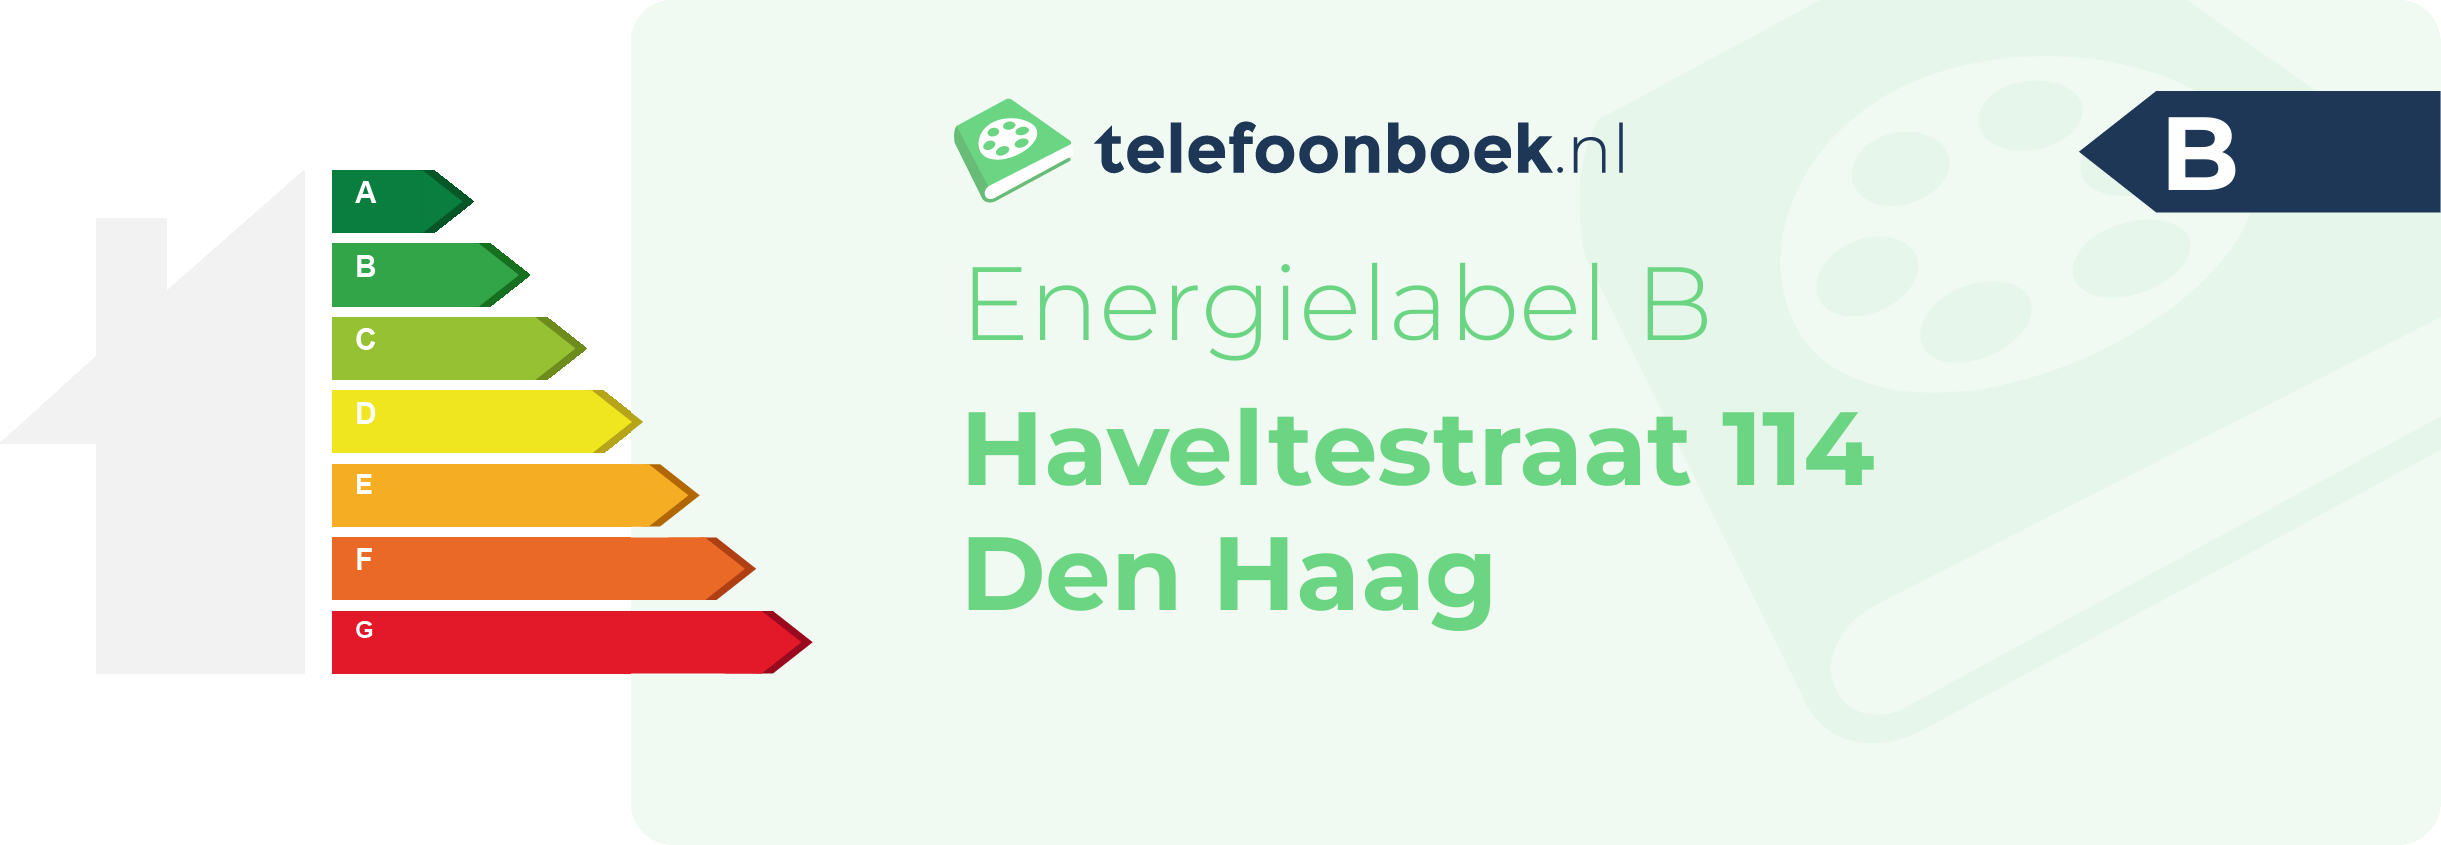 Energielabel Haveltestraat 114 Den Haag